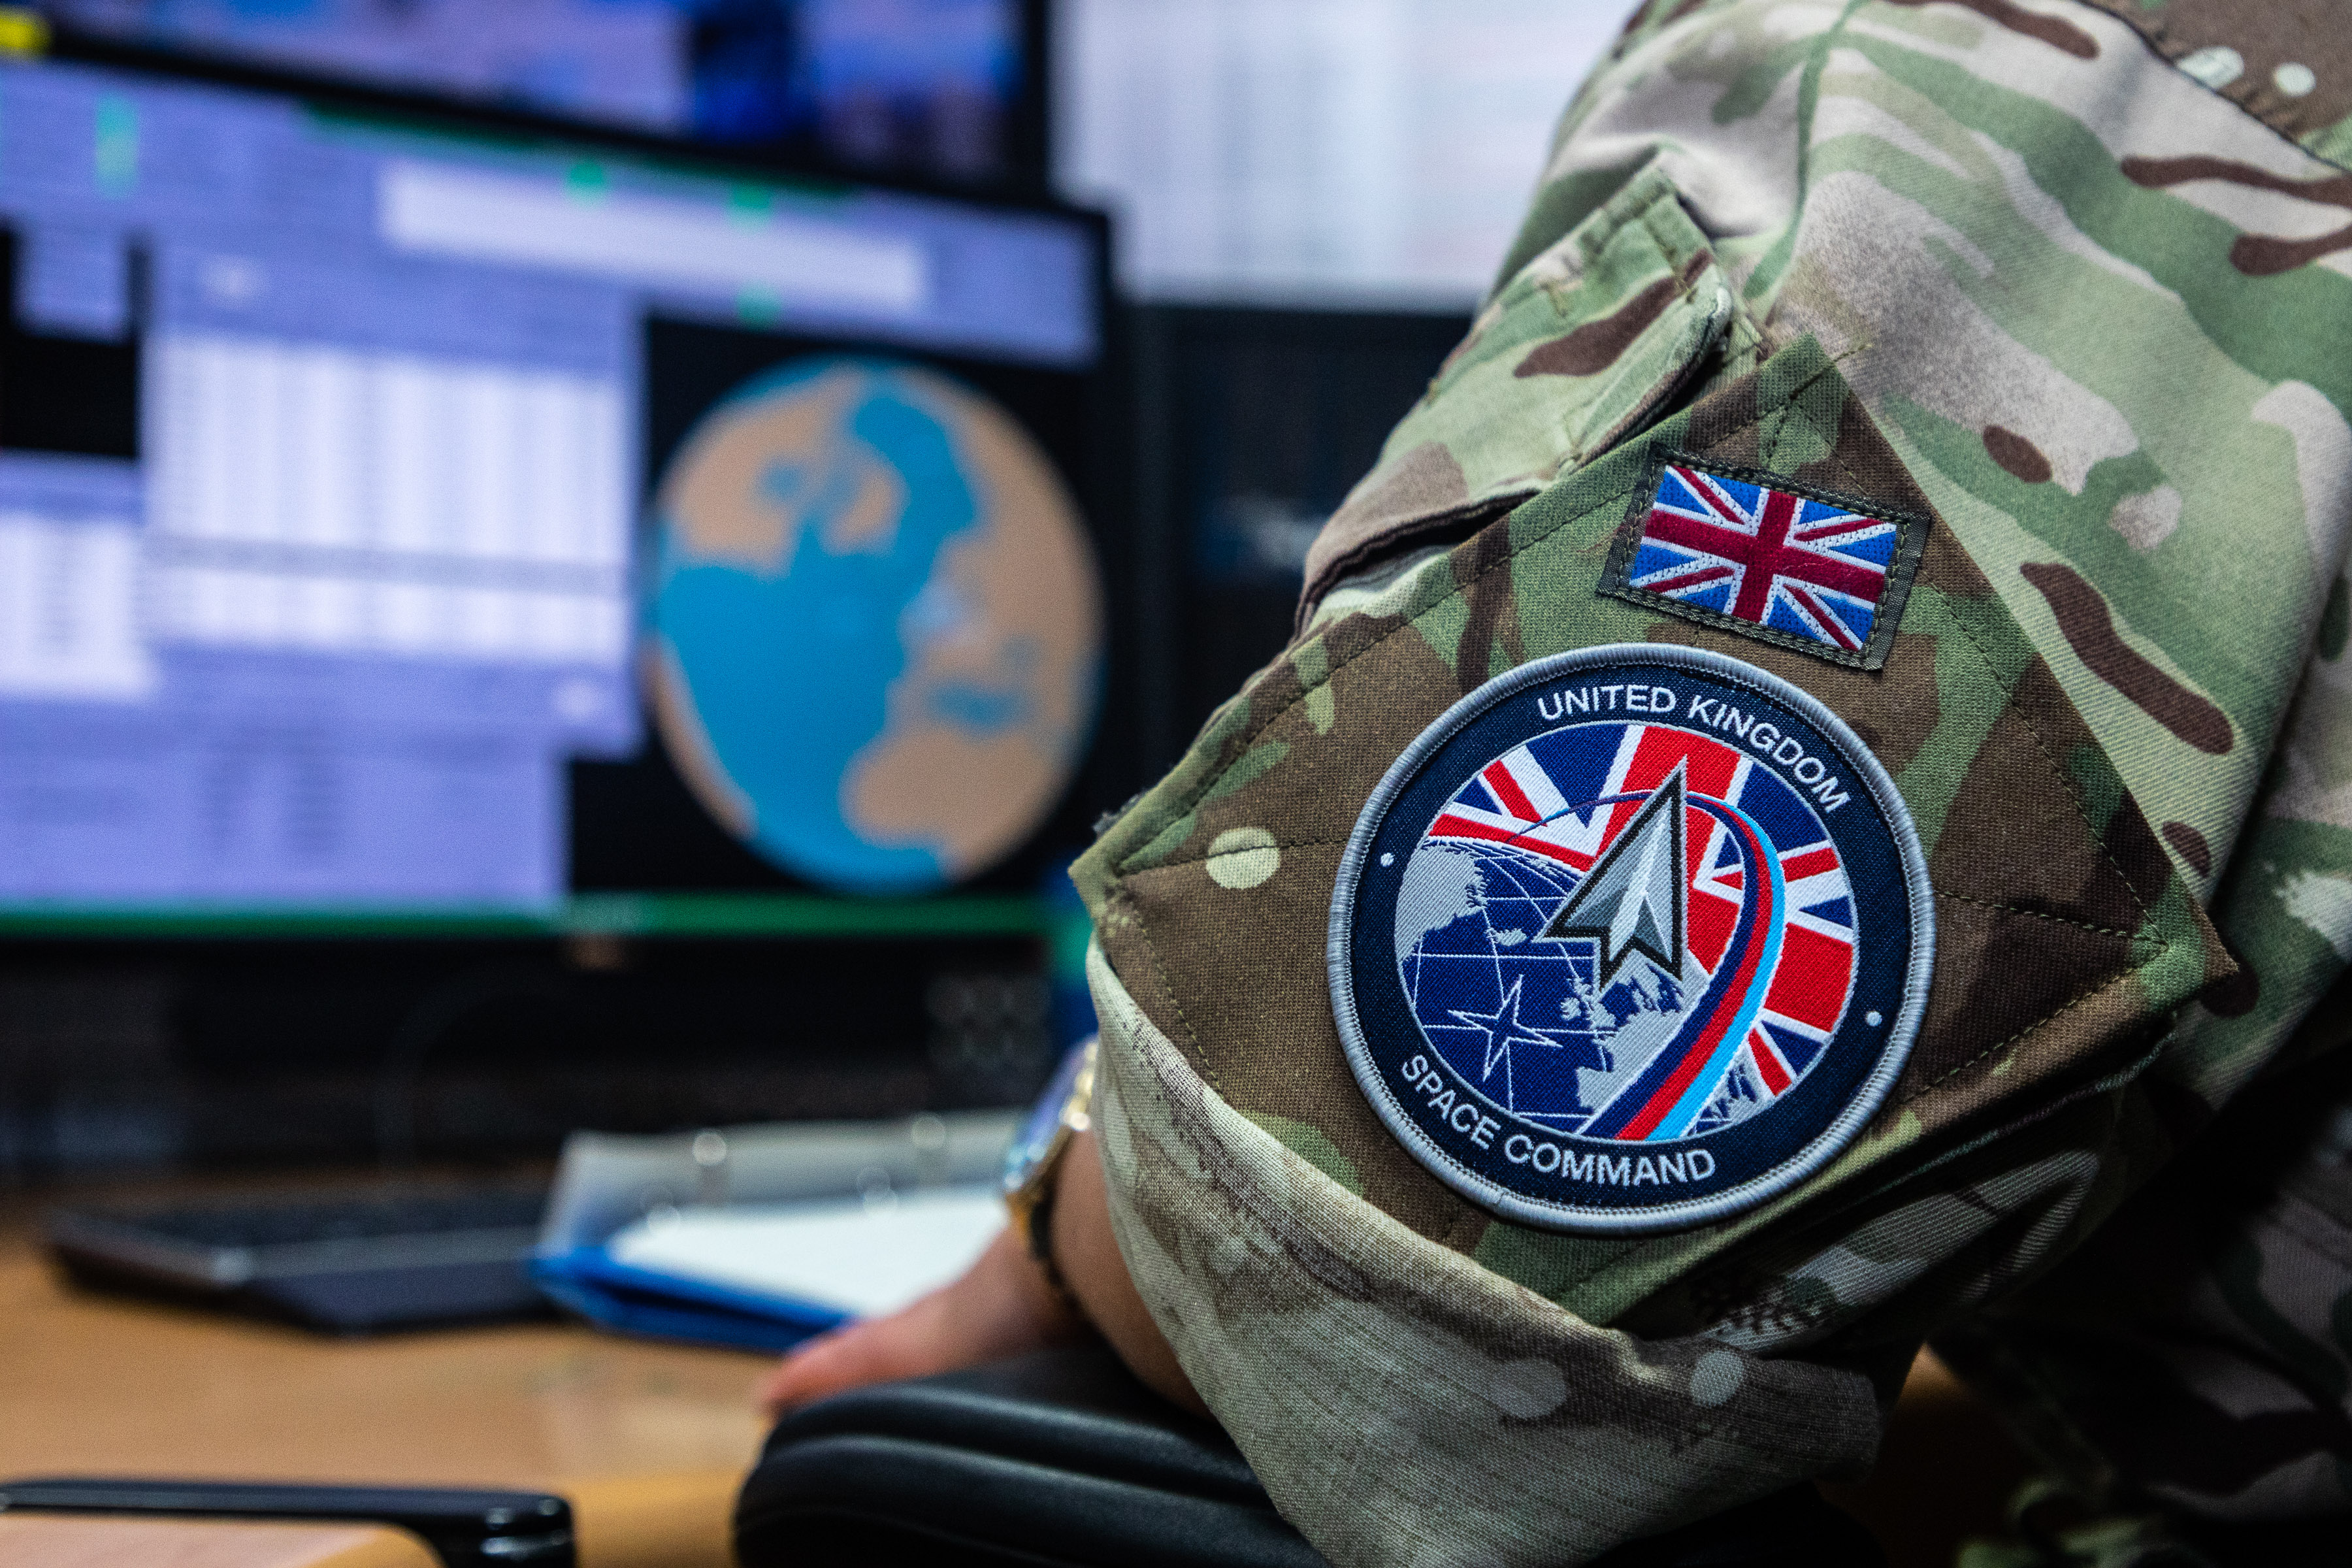 UK Space Command badge on arm of uniform